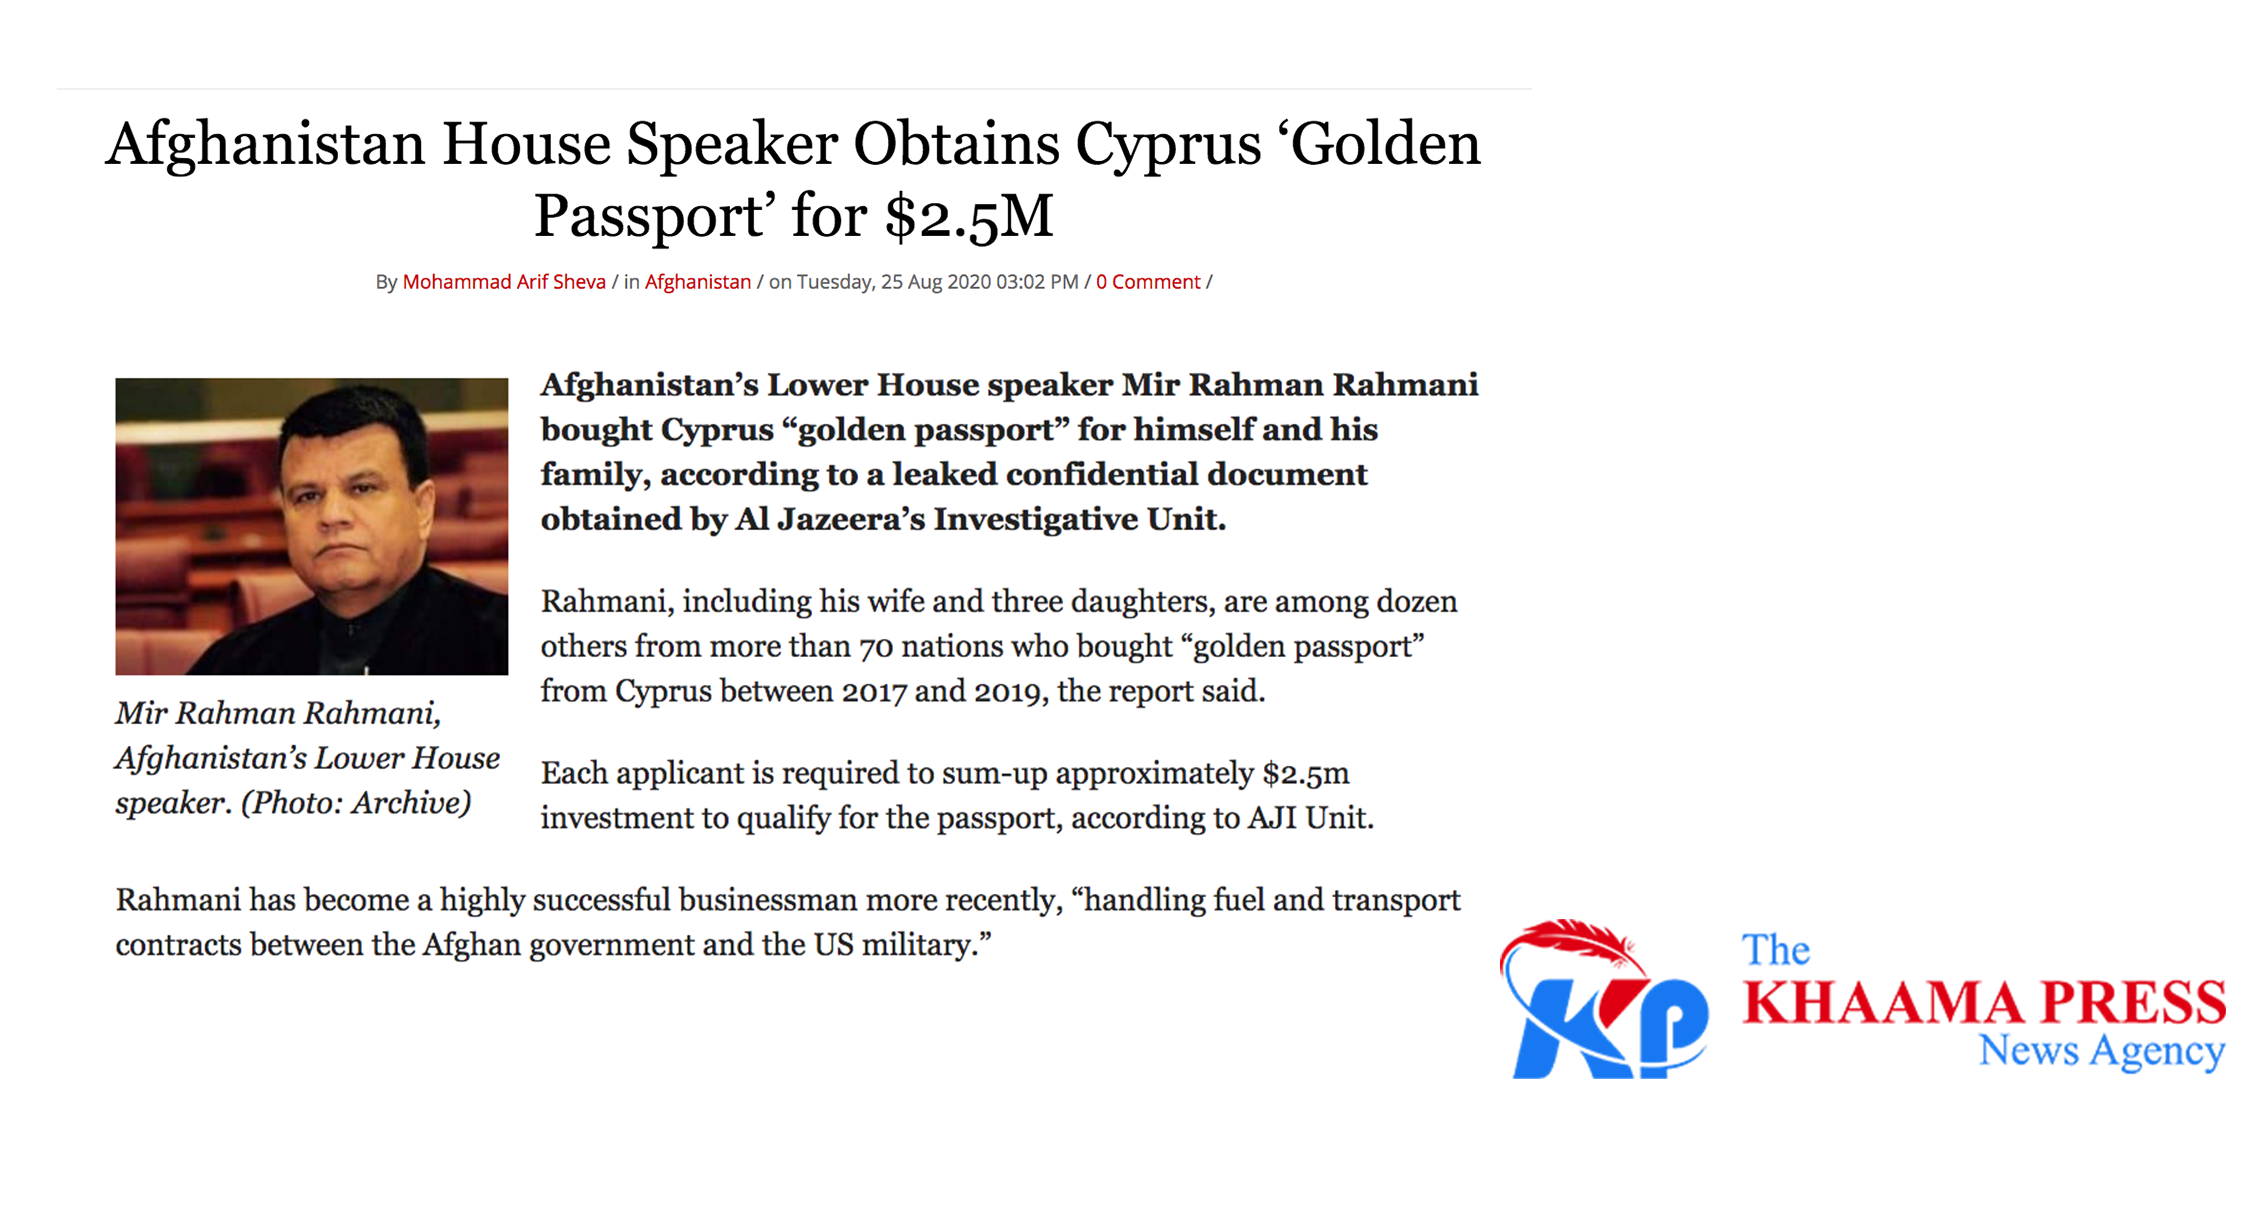 Khaama Press: Afghanistan House Speaker Obtains Cyprus ‘Golden Passport’ for $2.5M